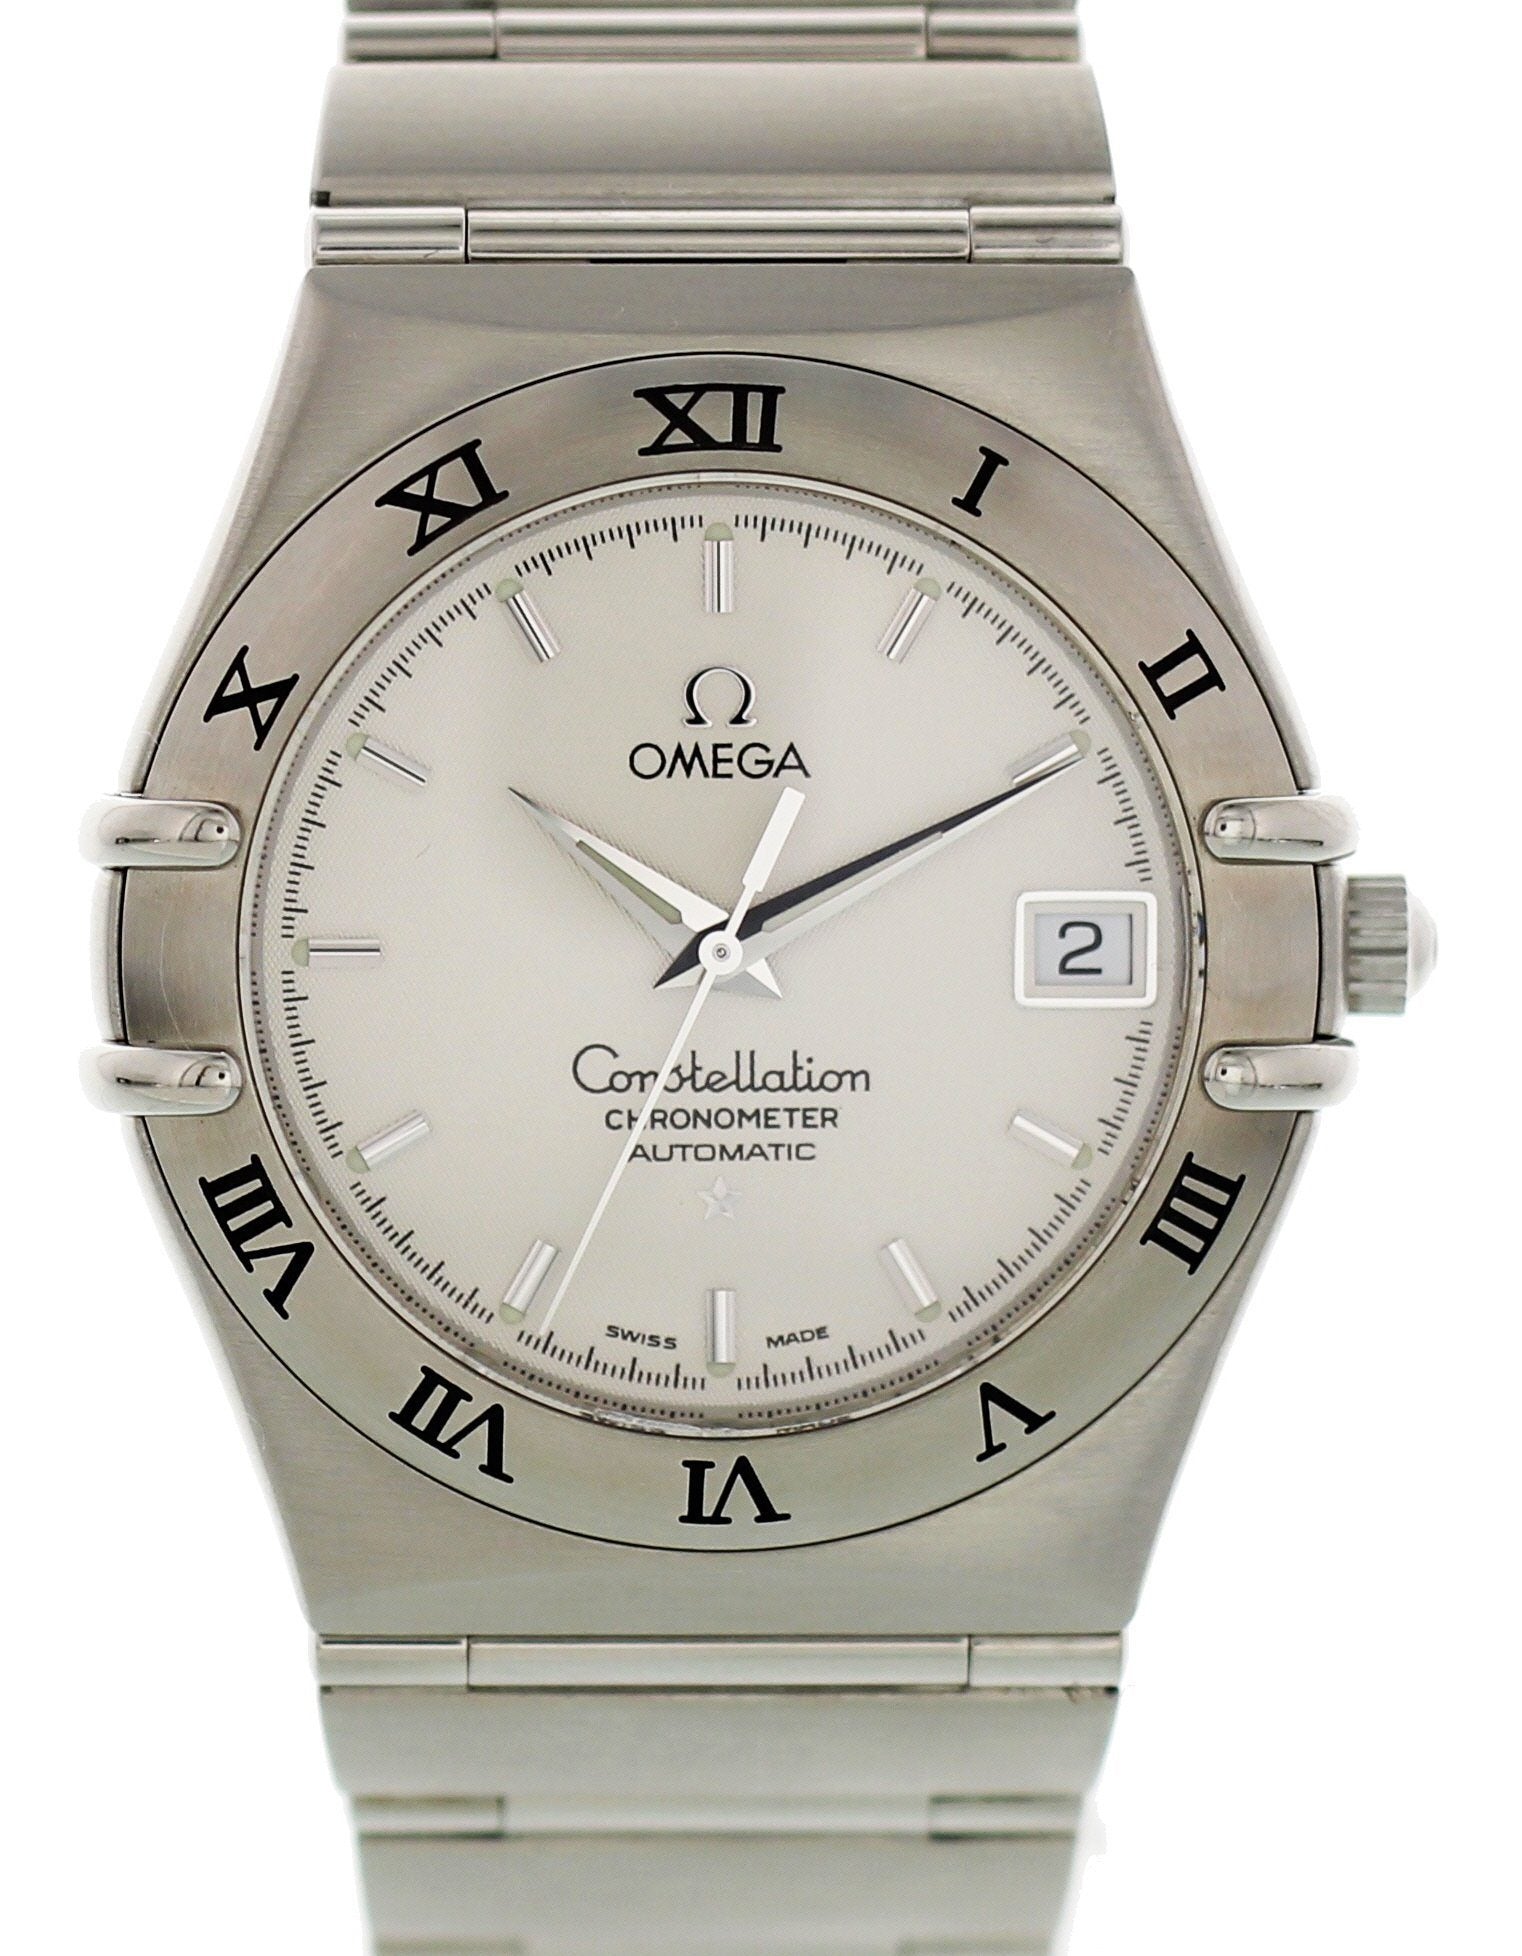 Omega Constellation Automatic Chronometer 368.1201 | eBay